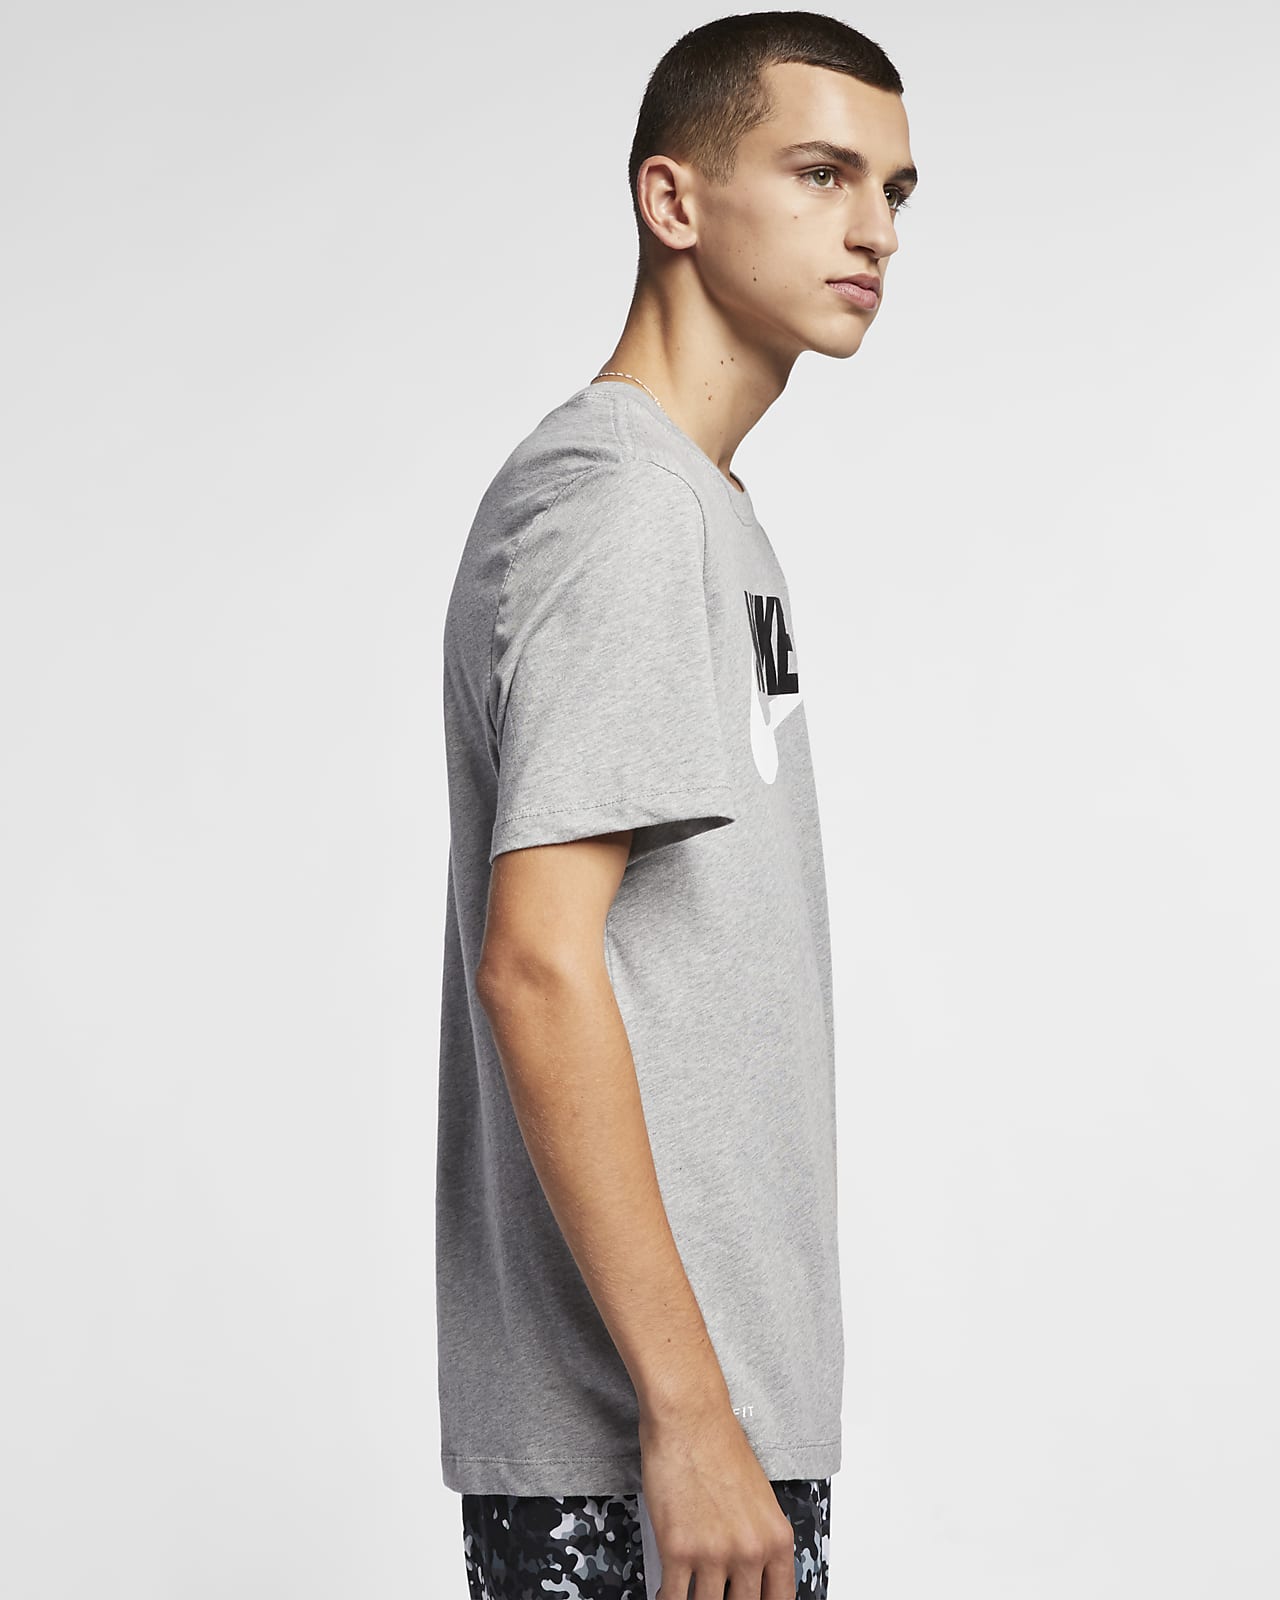 Nike Men's T-Shirt - Grey - XL